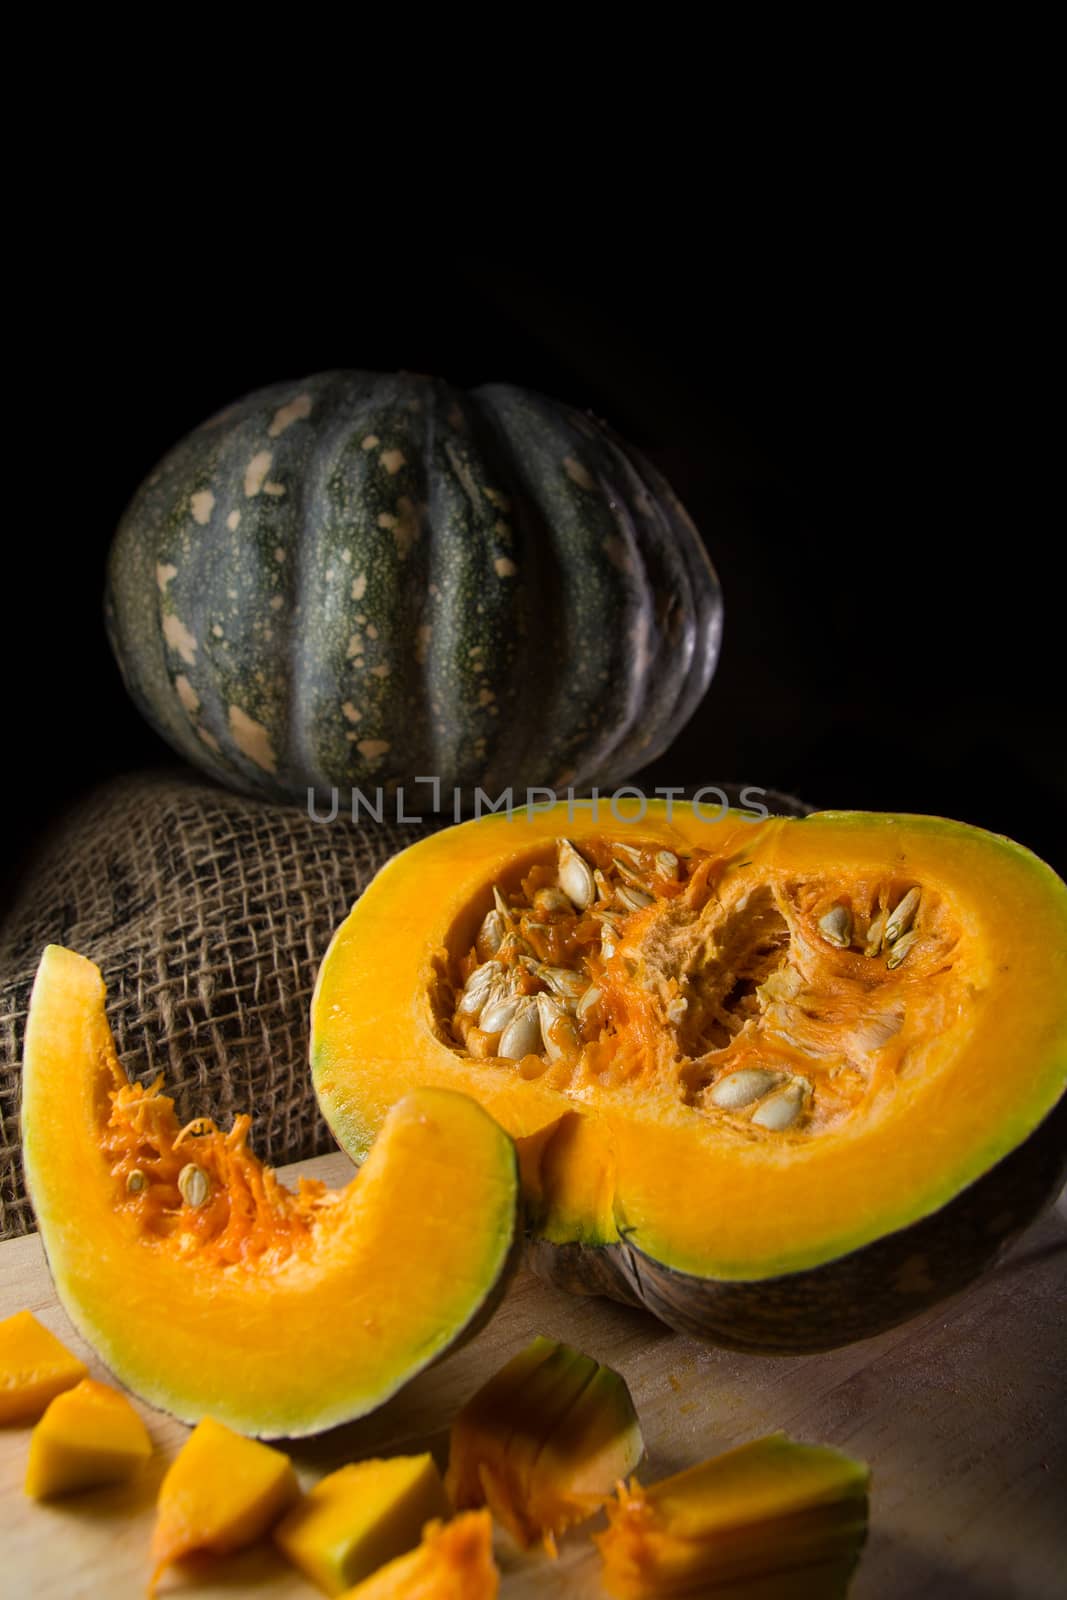 Pumpkin by tehcheesiong